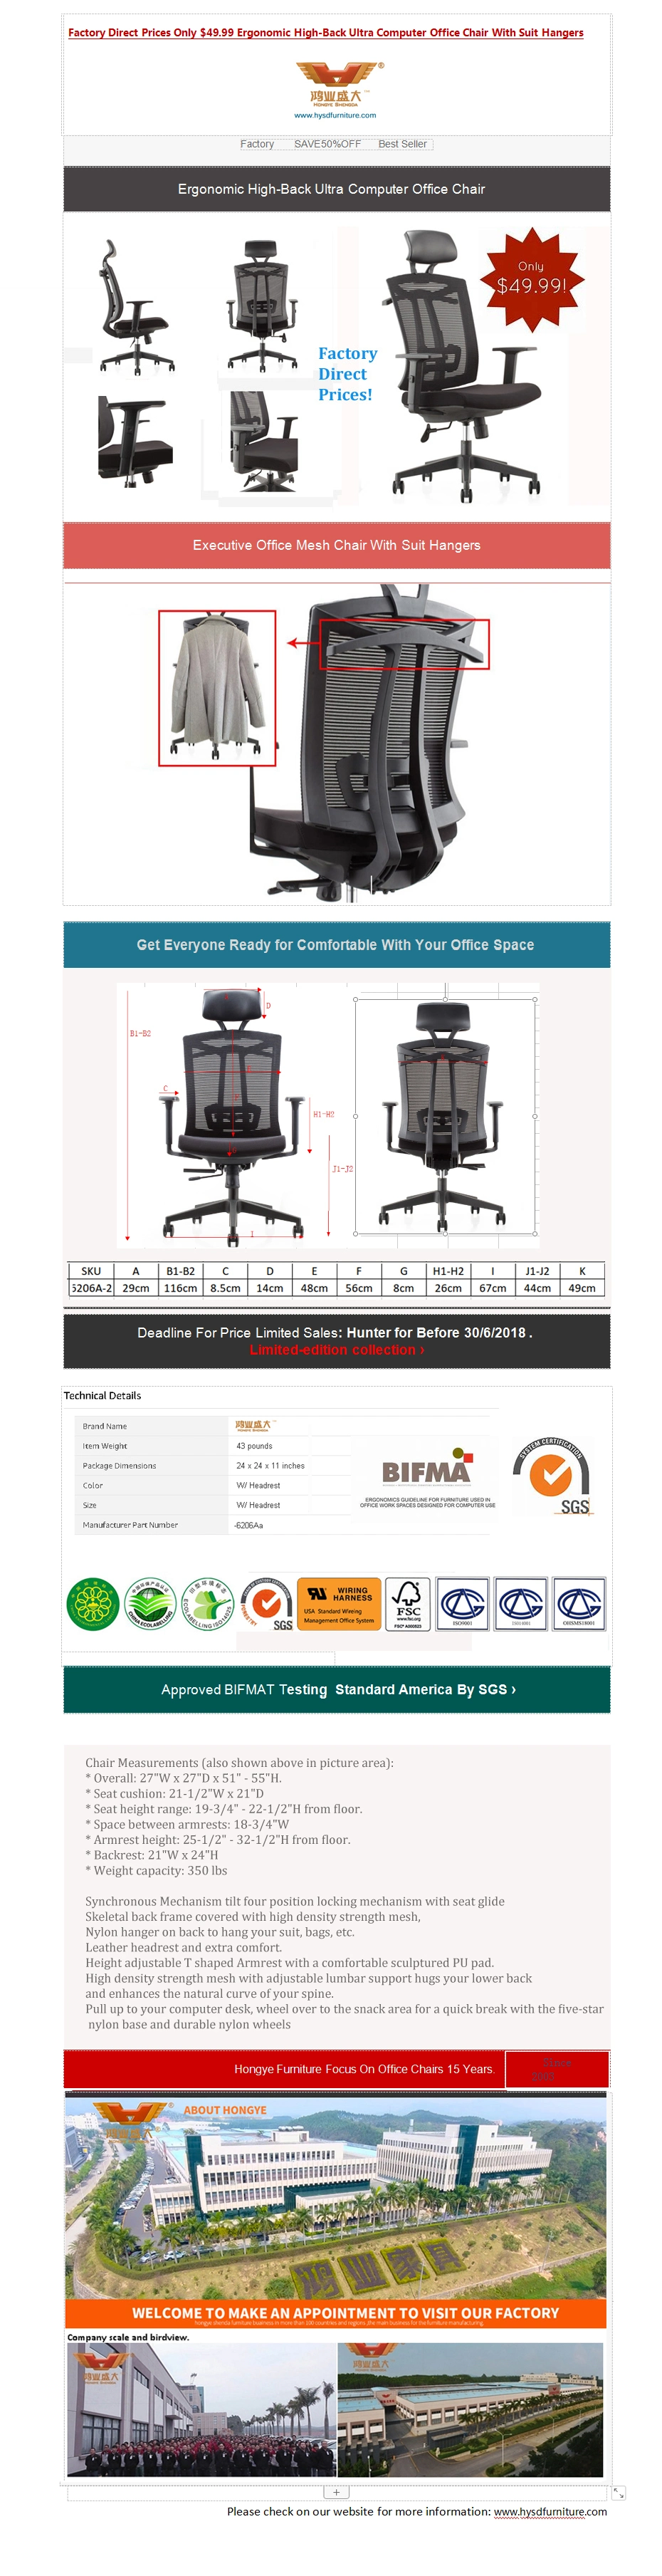 Top Sales Ergonomic Design Executive Swivel Mesh Office Chair with Coat Hanger Function